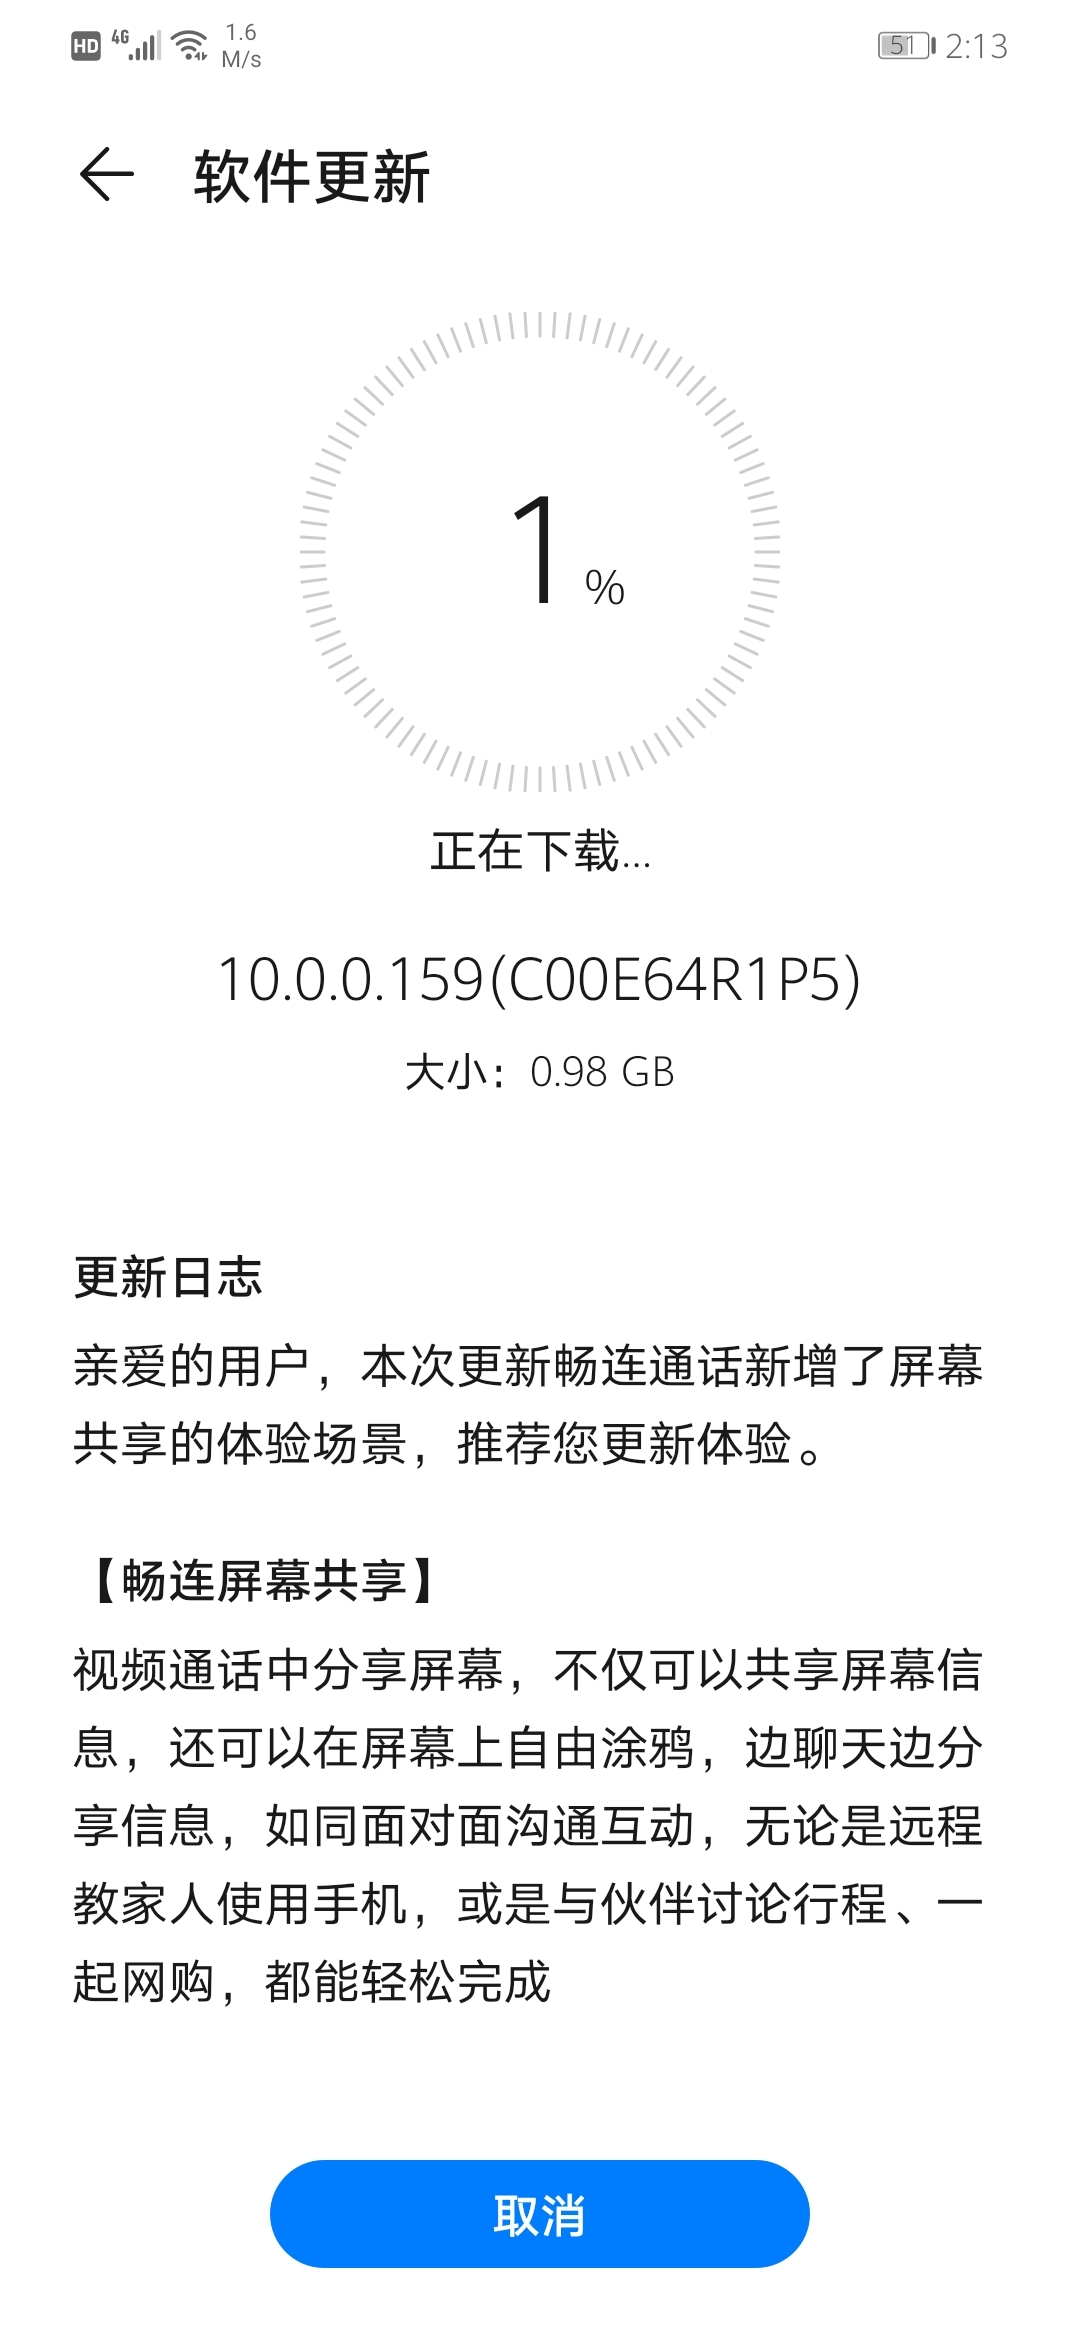 Huawei Maimang 7 EMUI 10.0.0.159 update